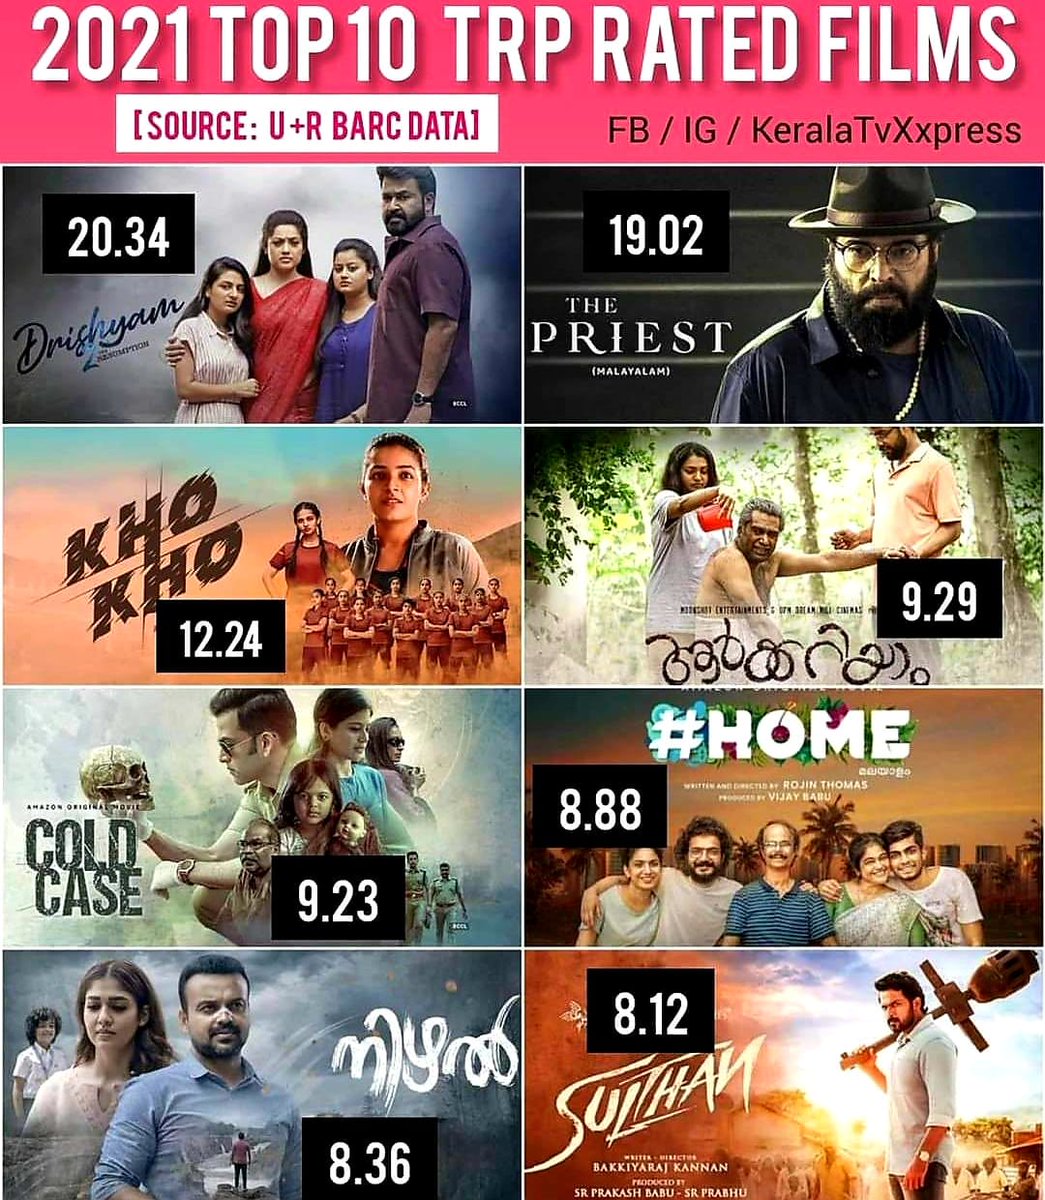 2021 Top 10 TRP - Malayalam movies.

1. #Drishyam2 - 20.34 TVR
2. #ThePriest - 19.02 TVR
3. #KhoKho - 12.24 TVR
4. #Aarkkariyam - 9.29 TVR
5. #Cold case - 9.23TVR
6.#Home - 8.88TVR
7. #Nizhal - 8.36TVR
8. #Jaisulthan -8.12TVR
9. #Joji - 7.13TVR
10. #Malik -6.52TVR